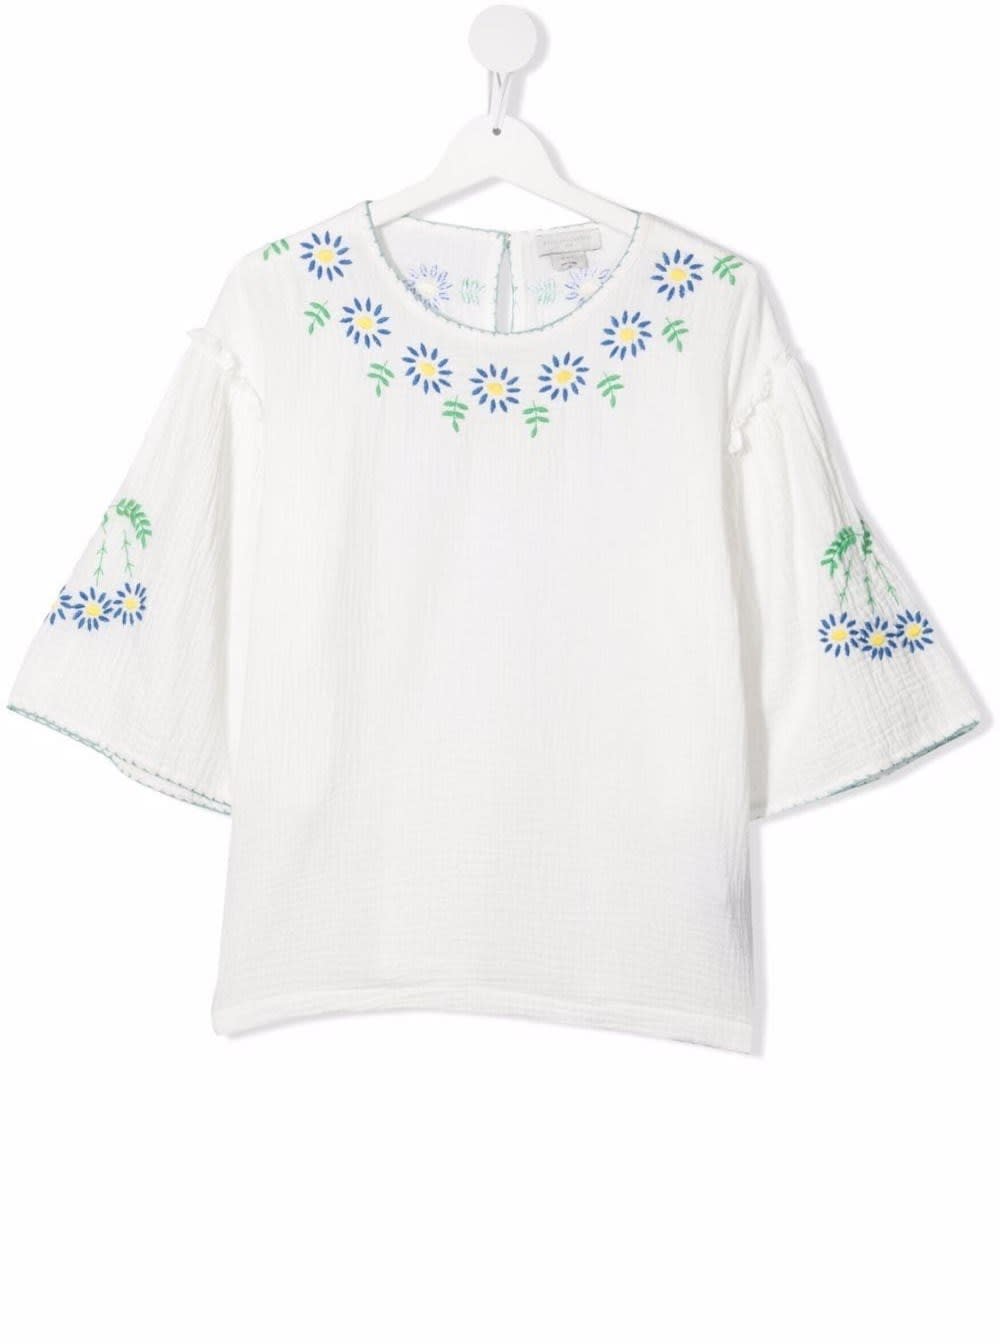 Stella McCartney Kids White Cotton Embroidered T-shirt